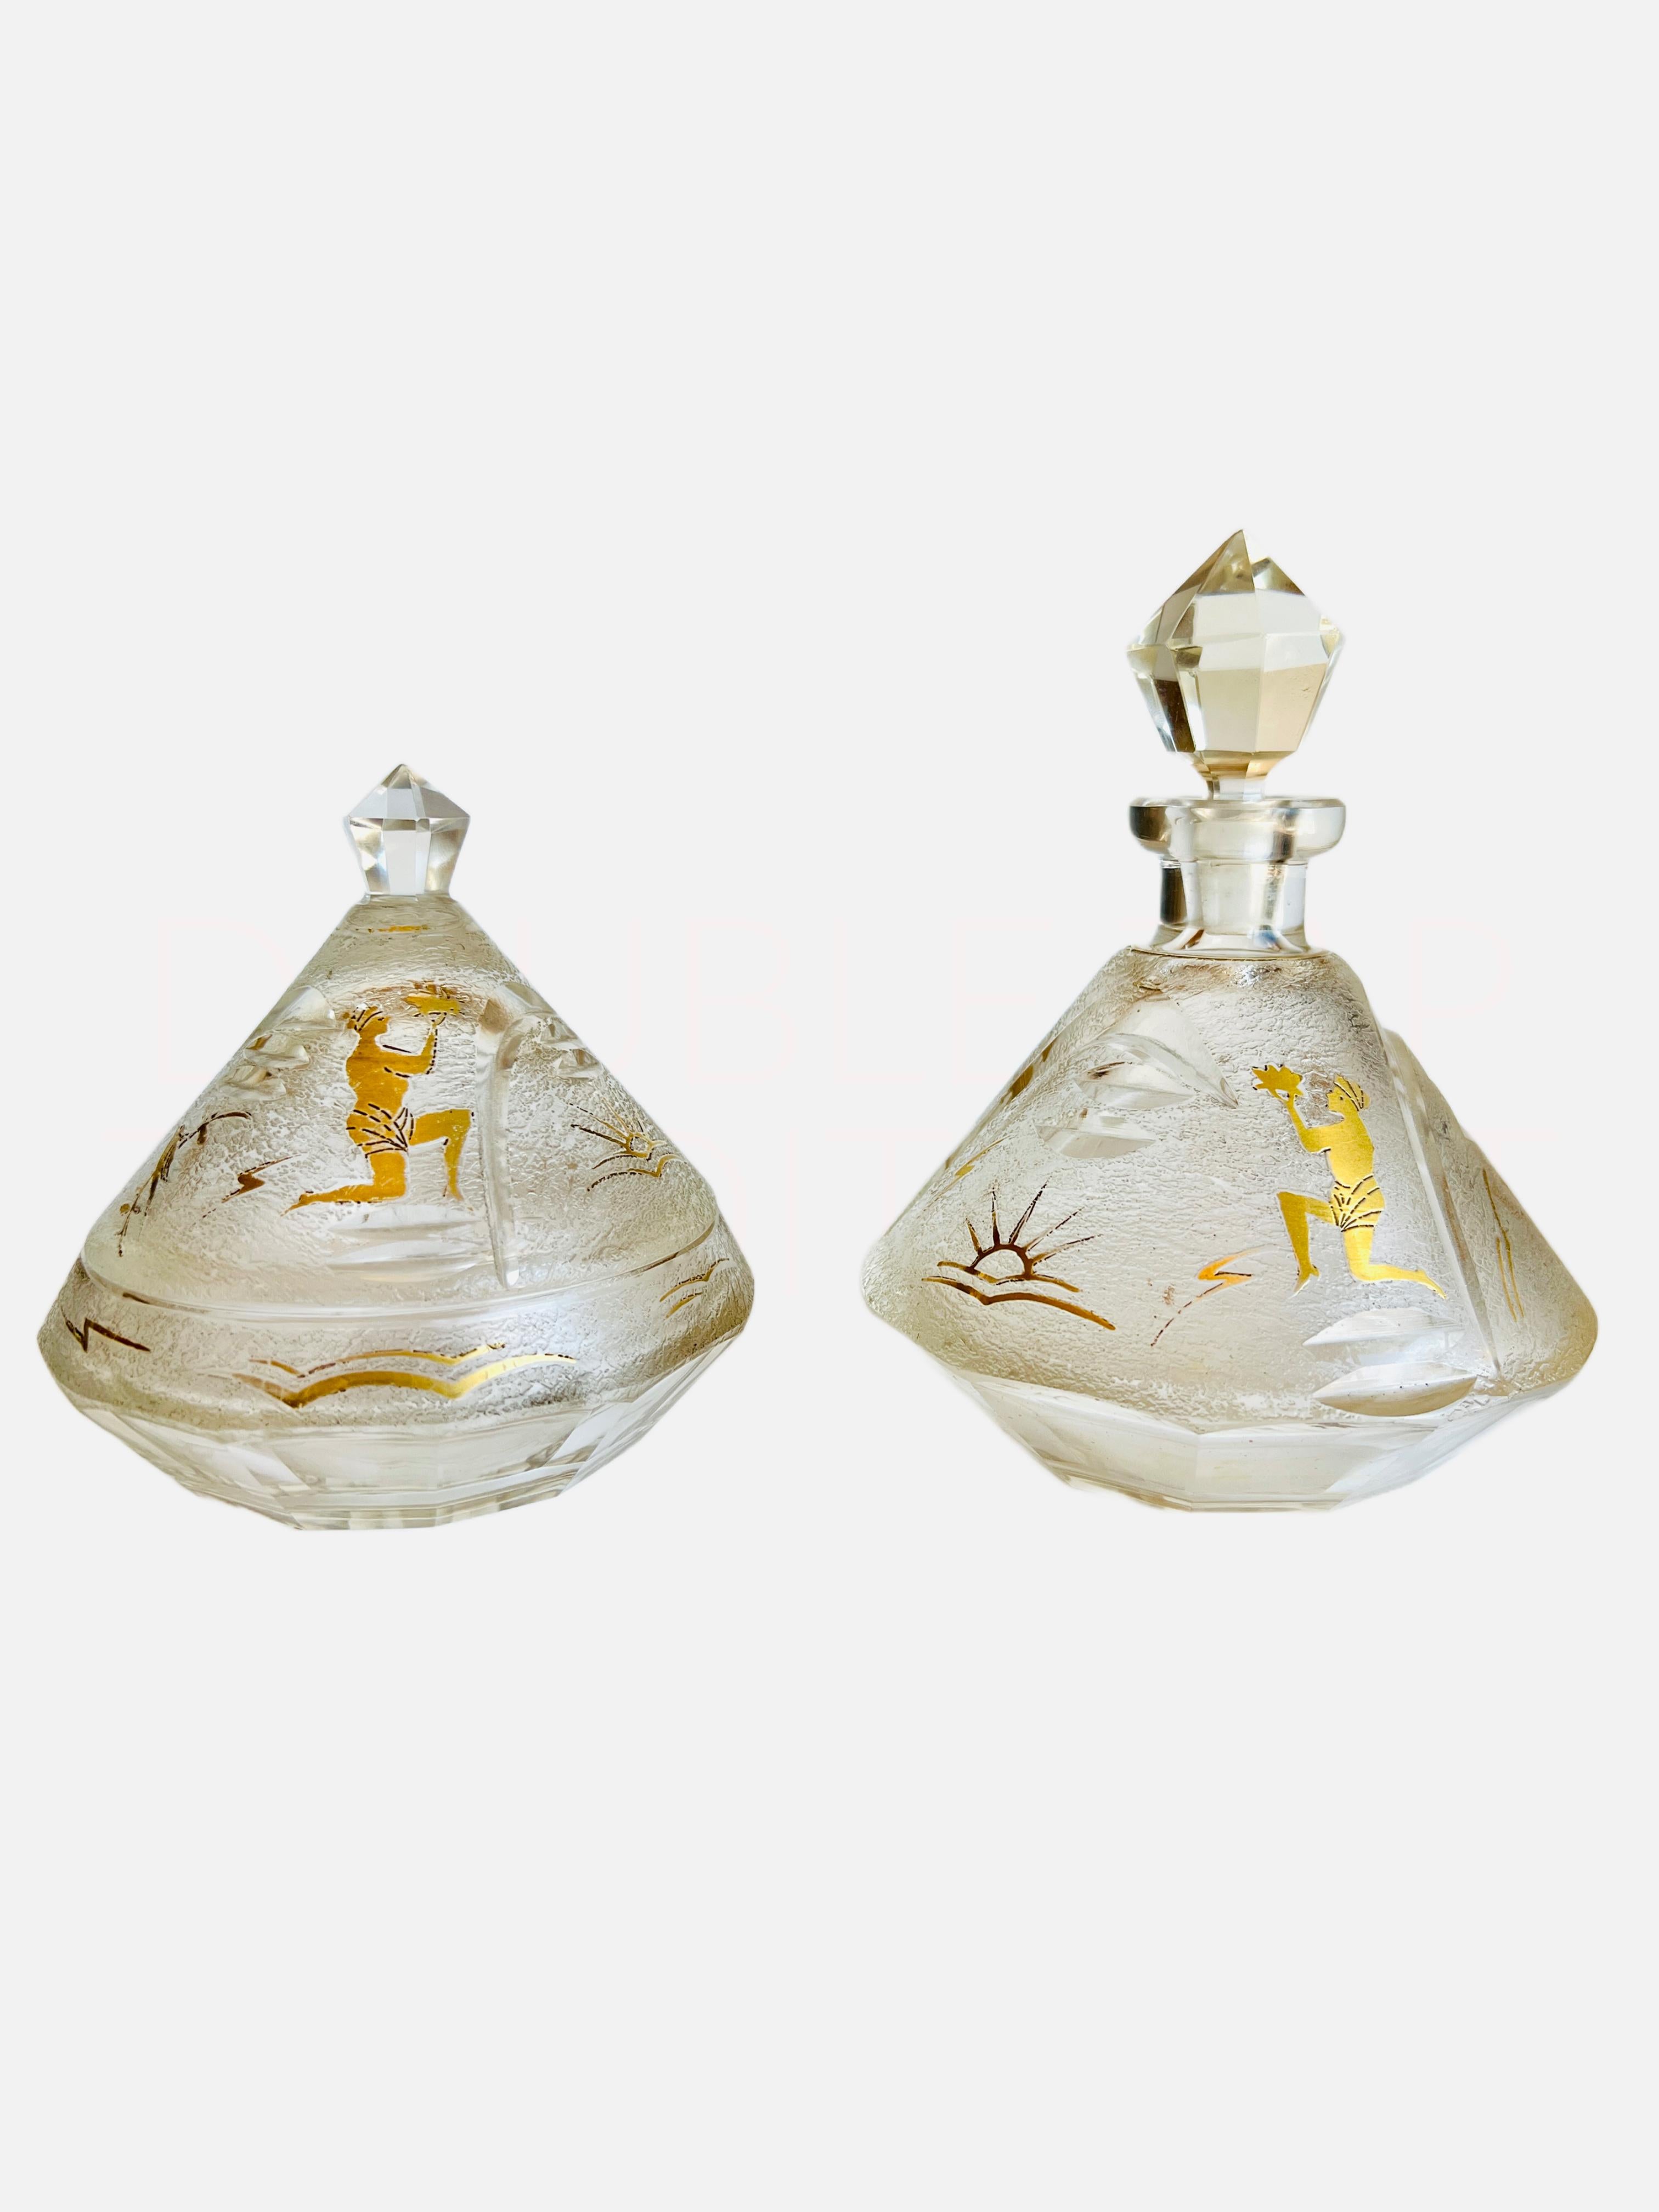 Art Deco Crystal Perfume Cologne Bottle Vanity Set W/ Ancient Gold Hieroglyphs Egyptian For Sale